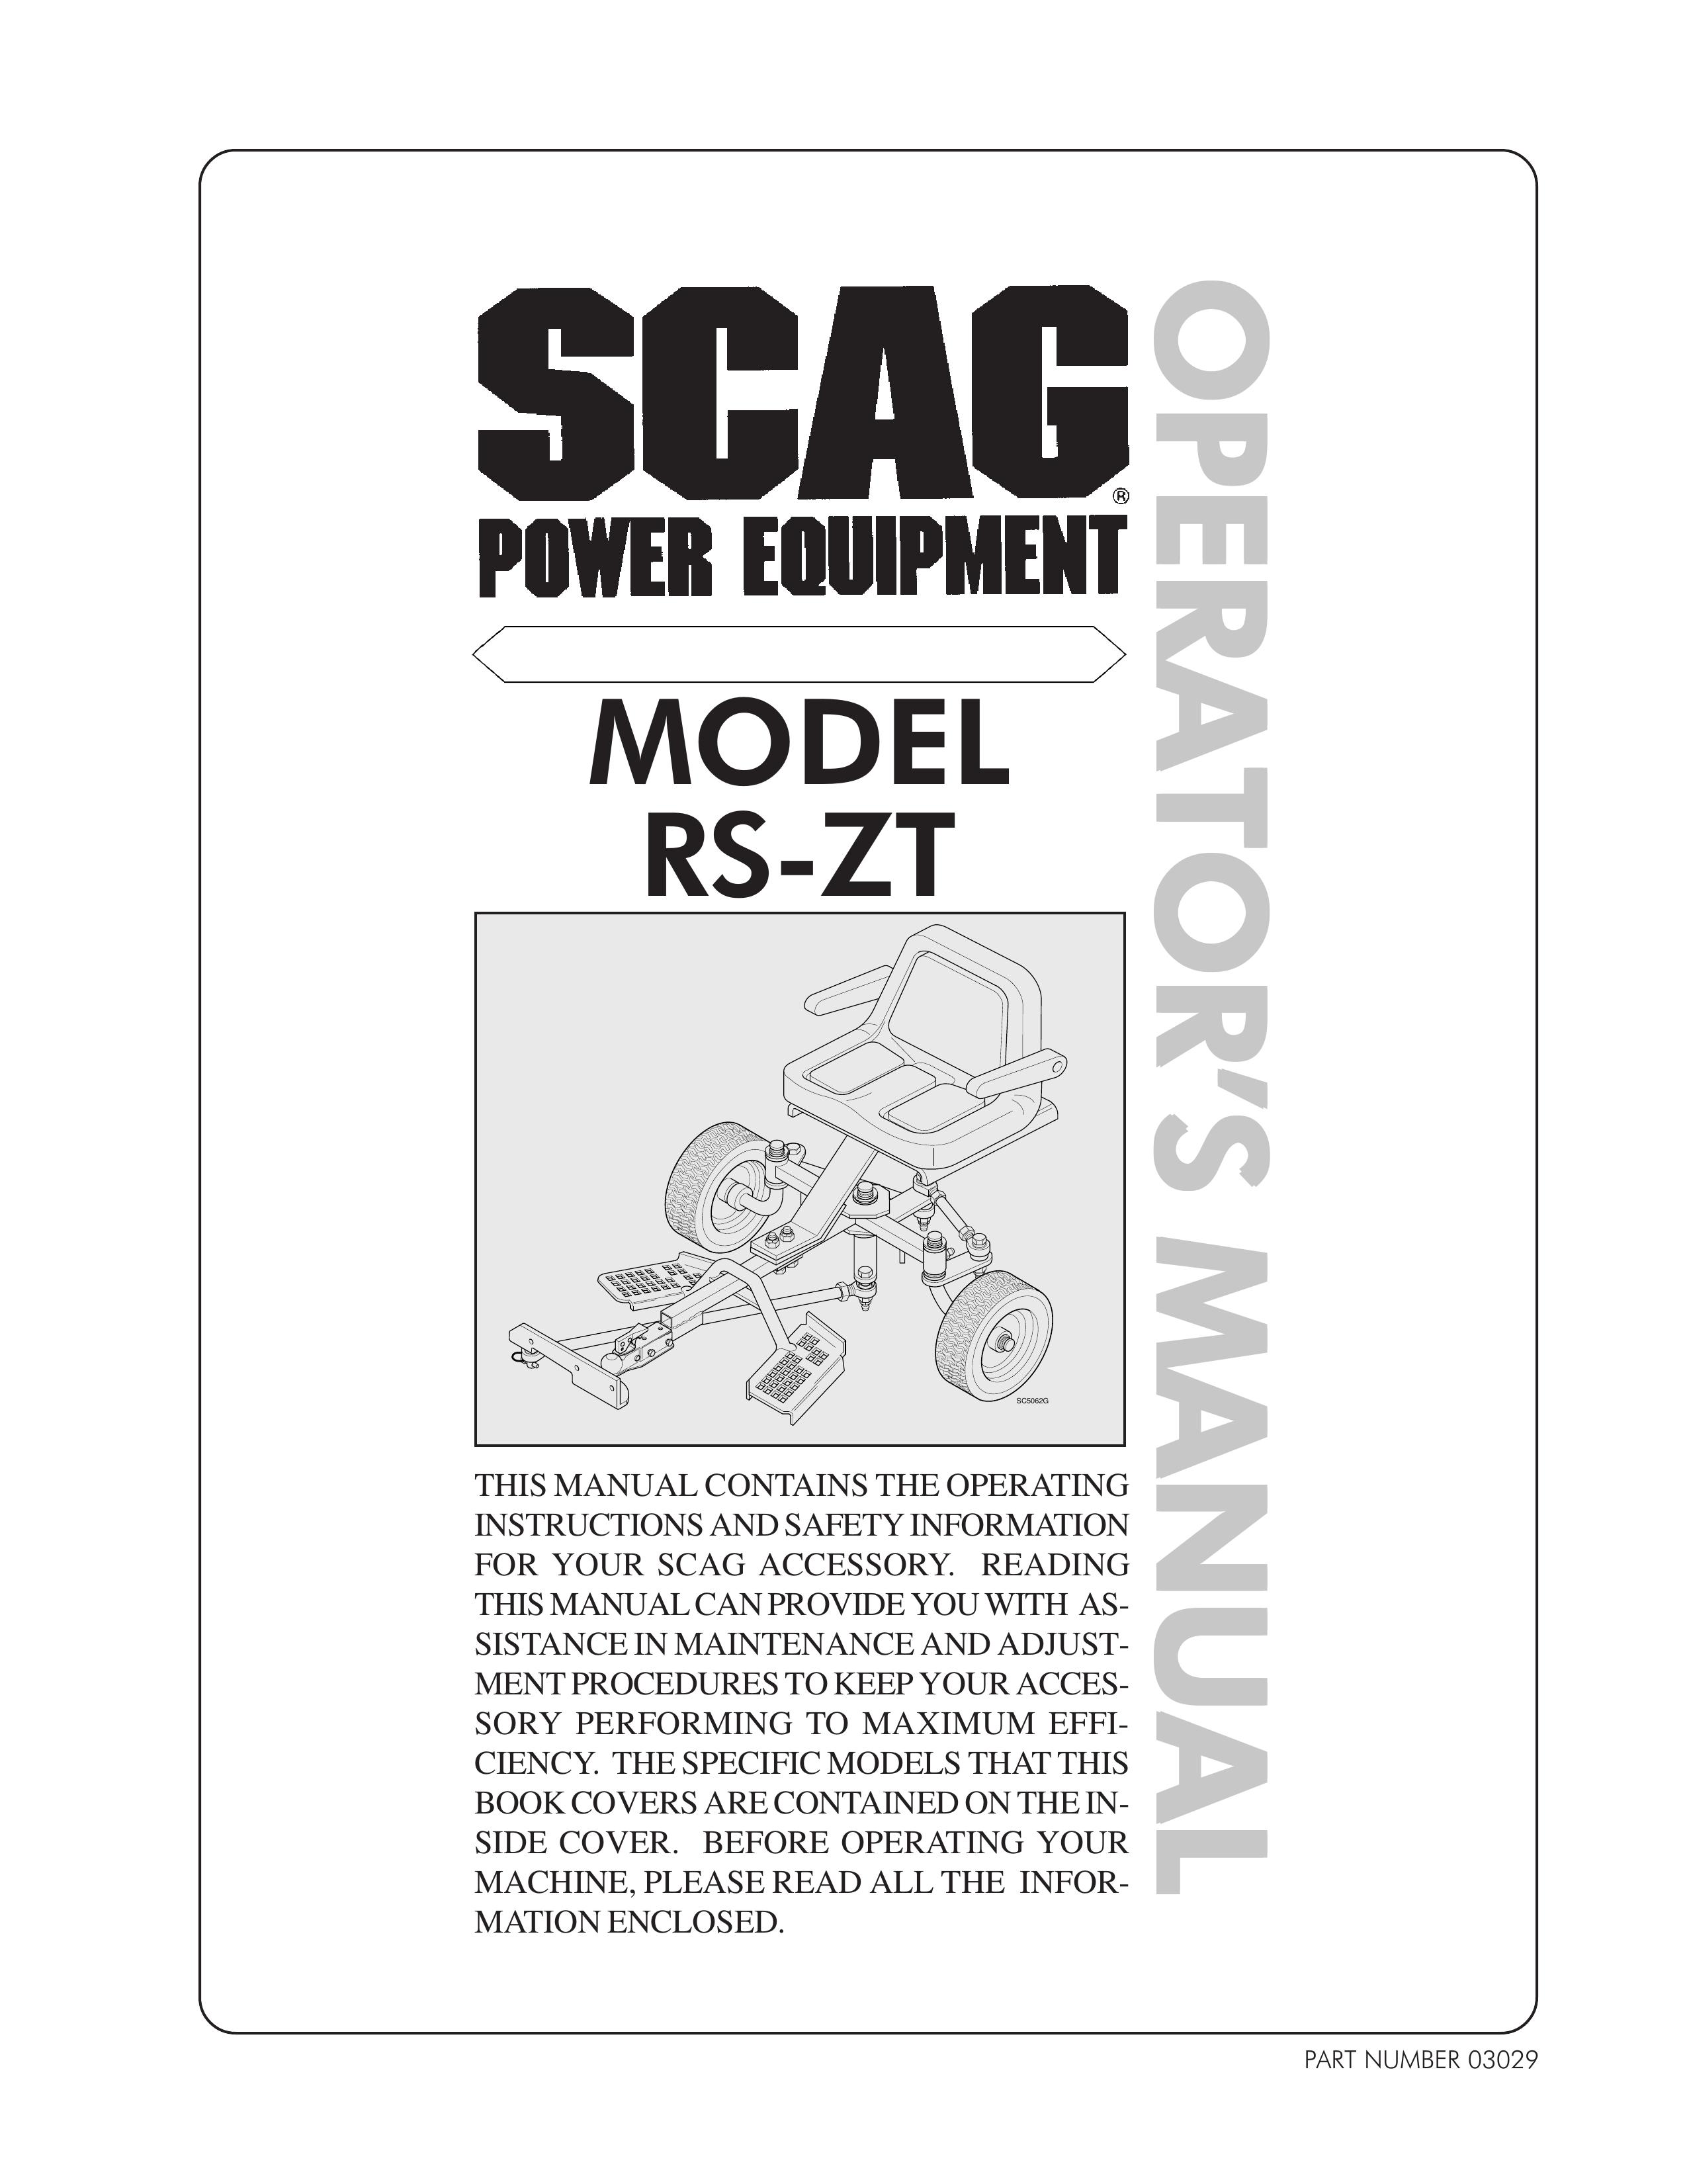 Scag Power Equipment RS-ZT Lawn Mower User Manual